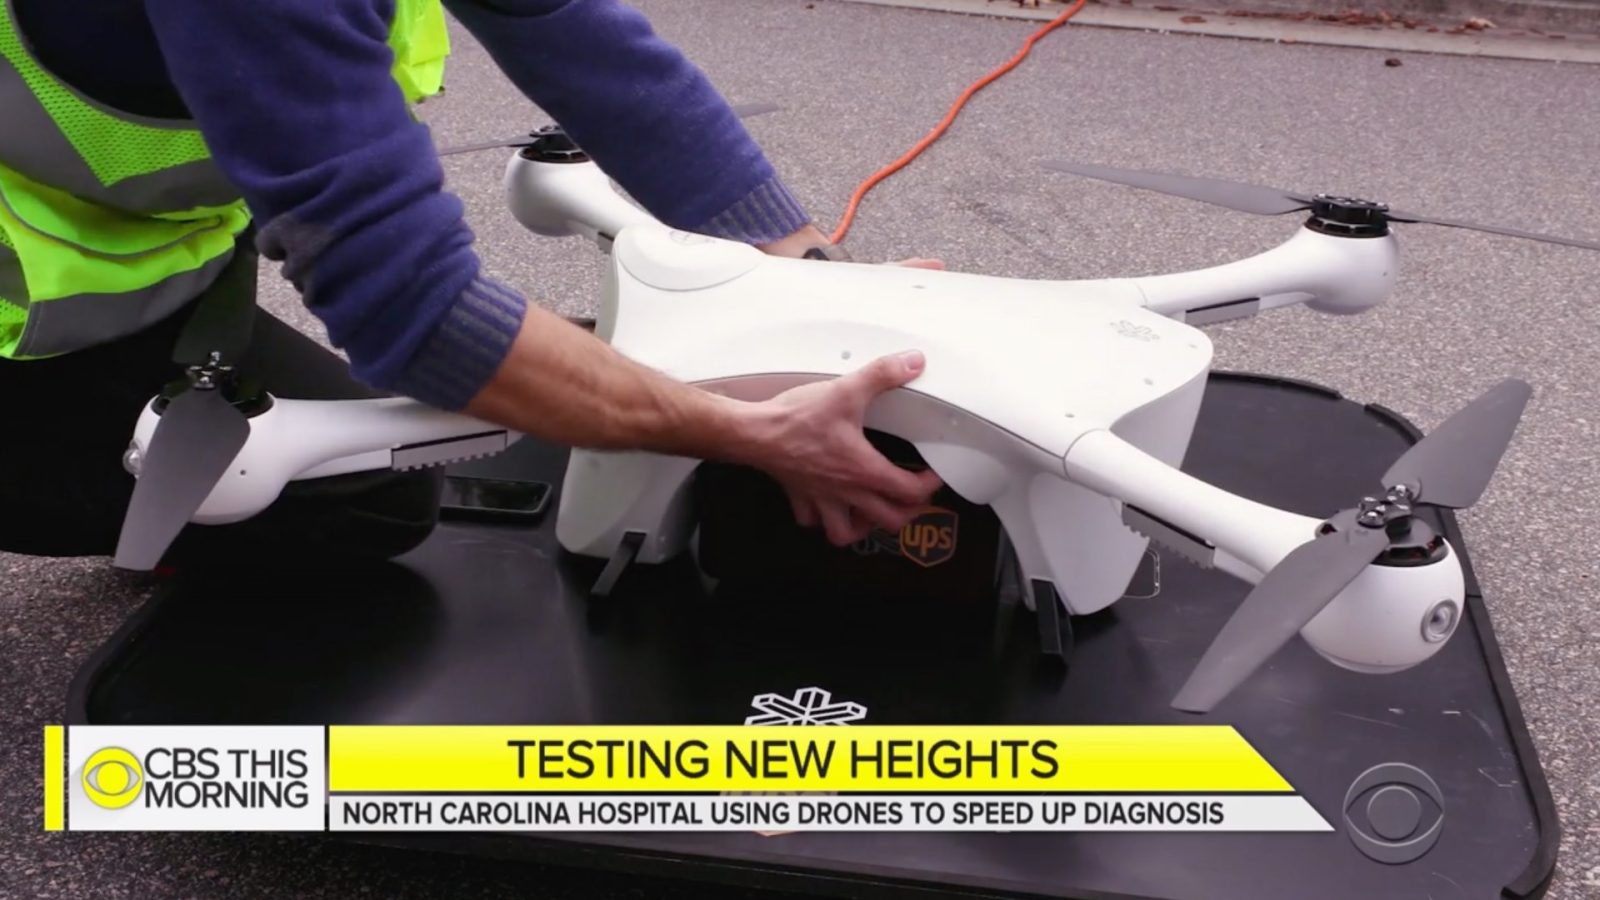 North Carolina drone delivery program helps diagnose patients faster